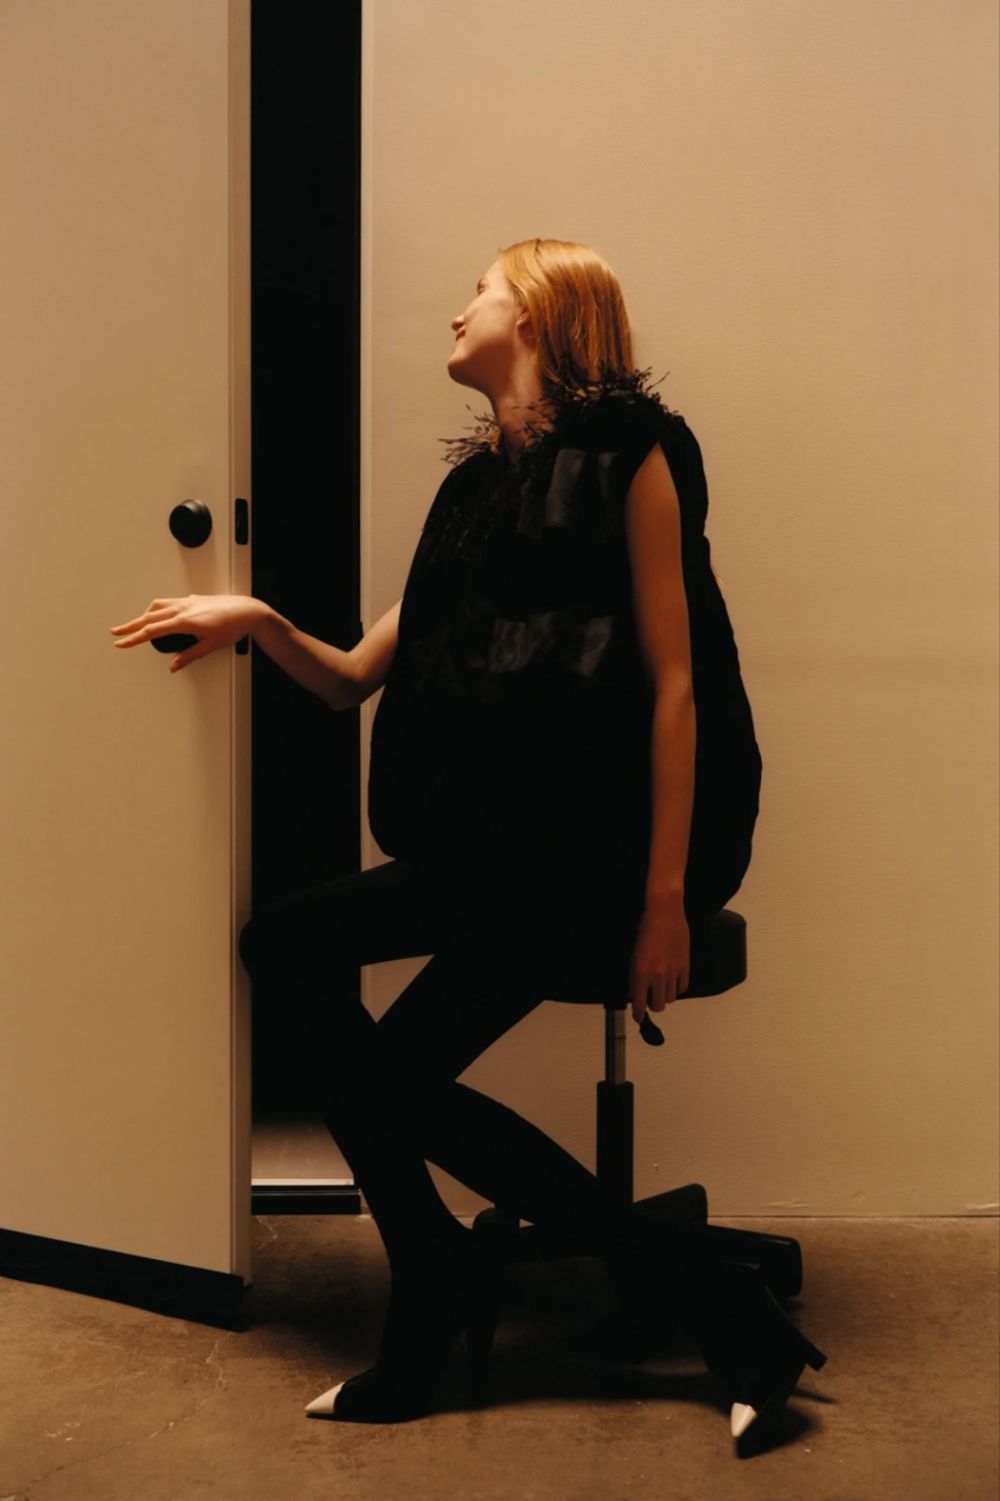   Clothing & Accessories: Saint Laurent by Anthony Vaccarello / Model: Rianne van Rompaey. Photographer: Colin Dodgson. Stylist: Alastair McKimm. Set Designer: Spencer Vrooman